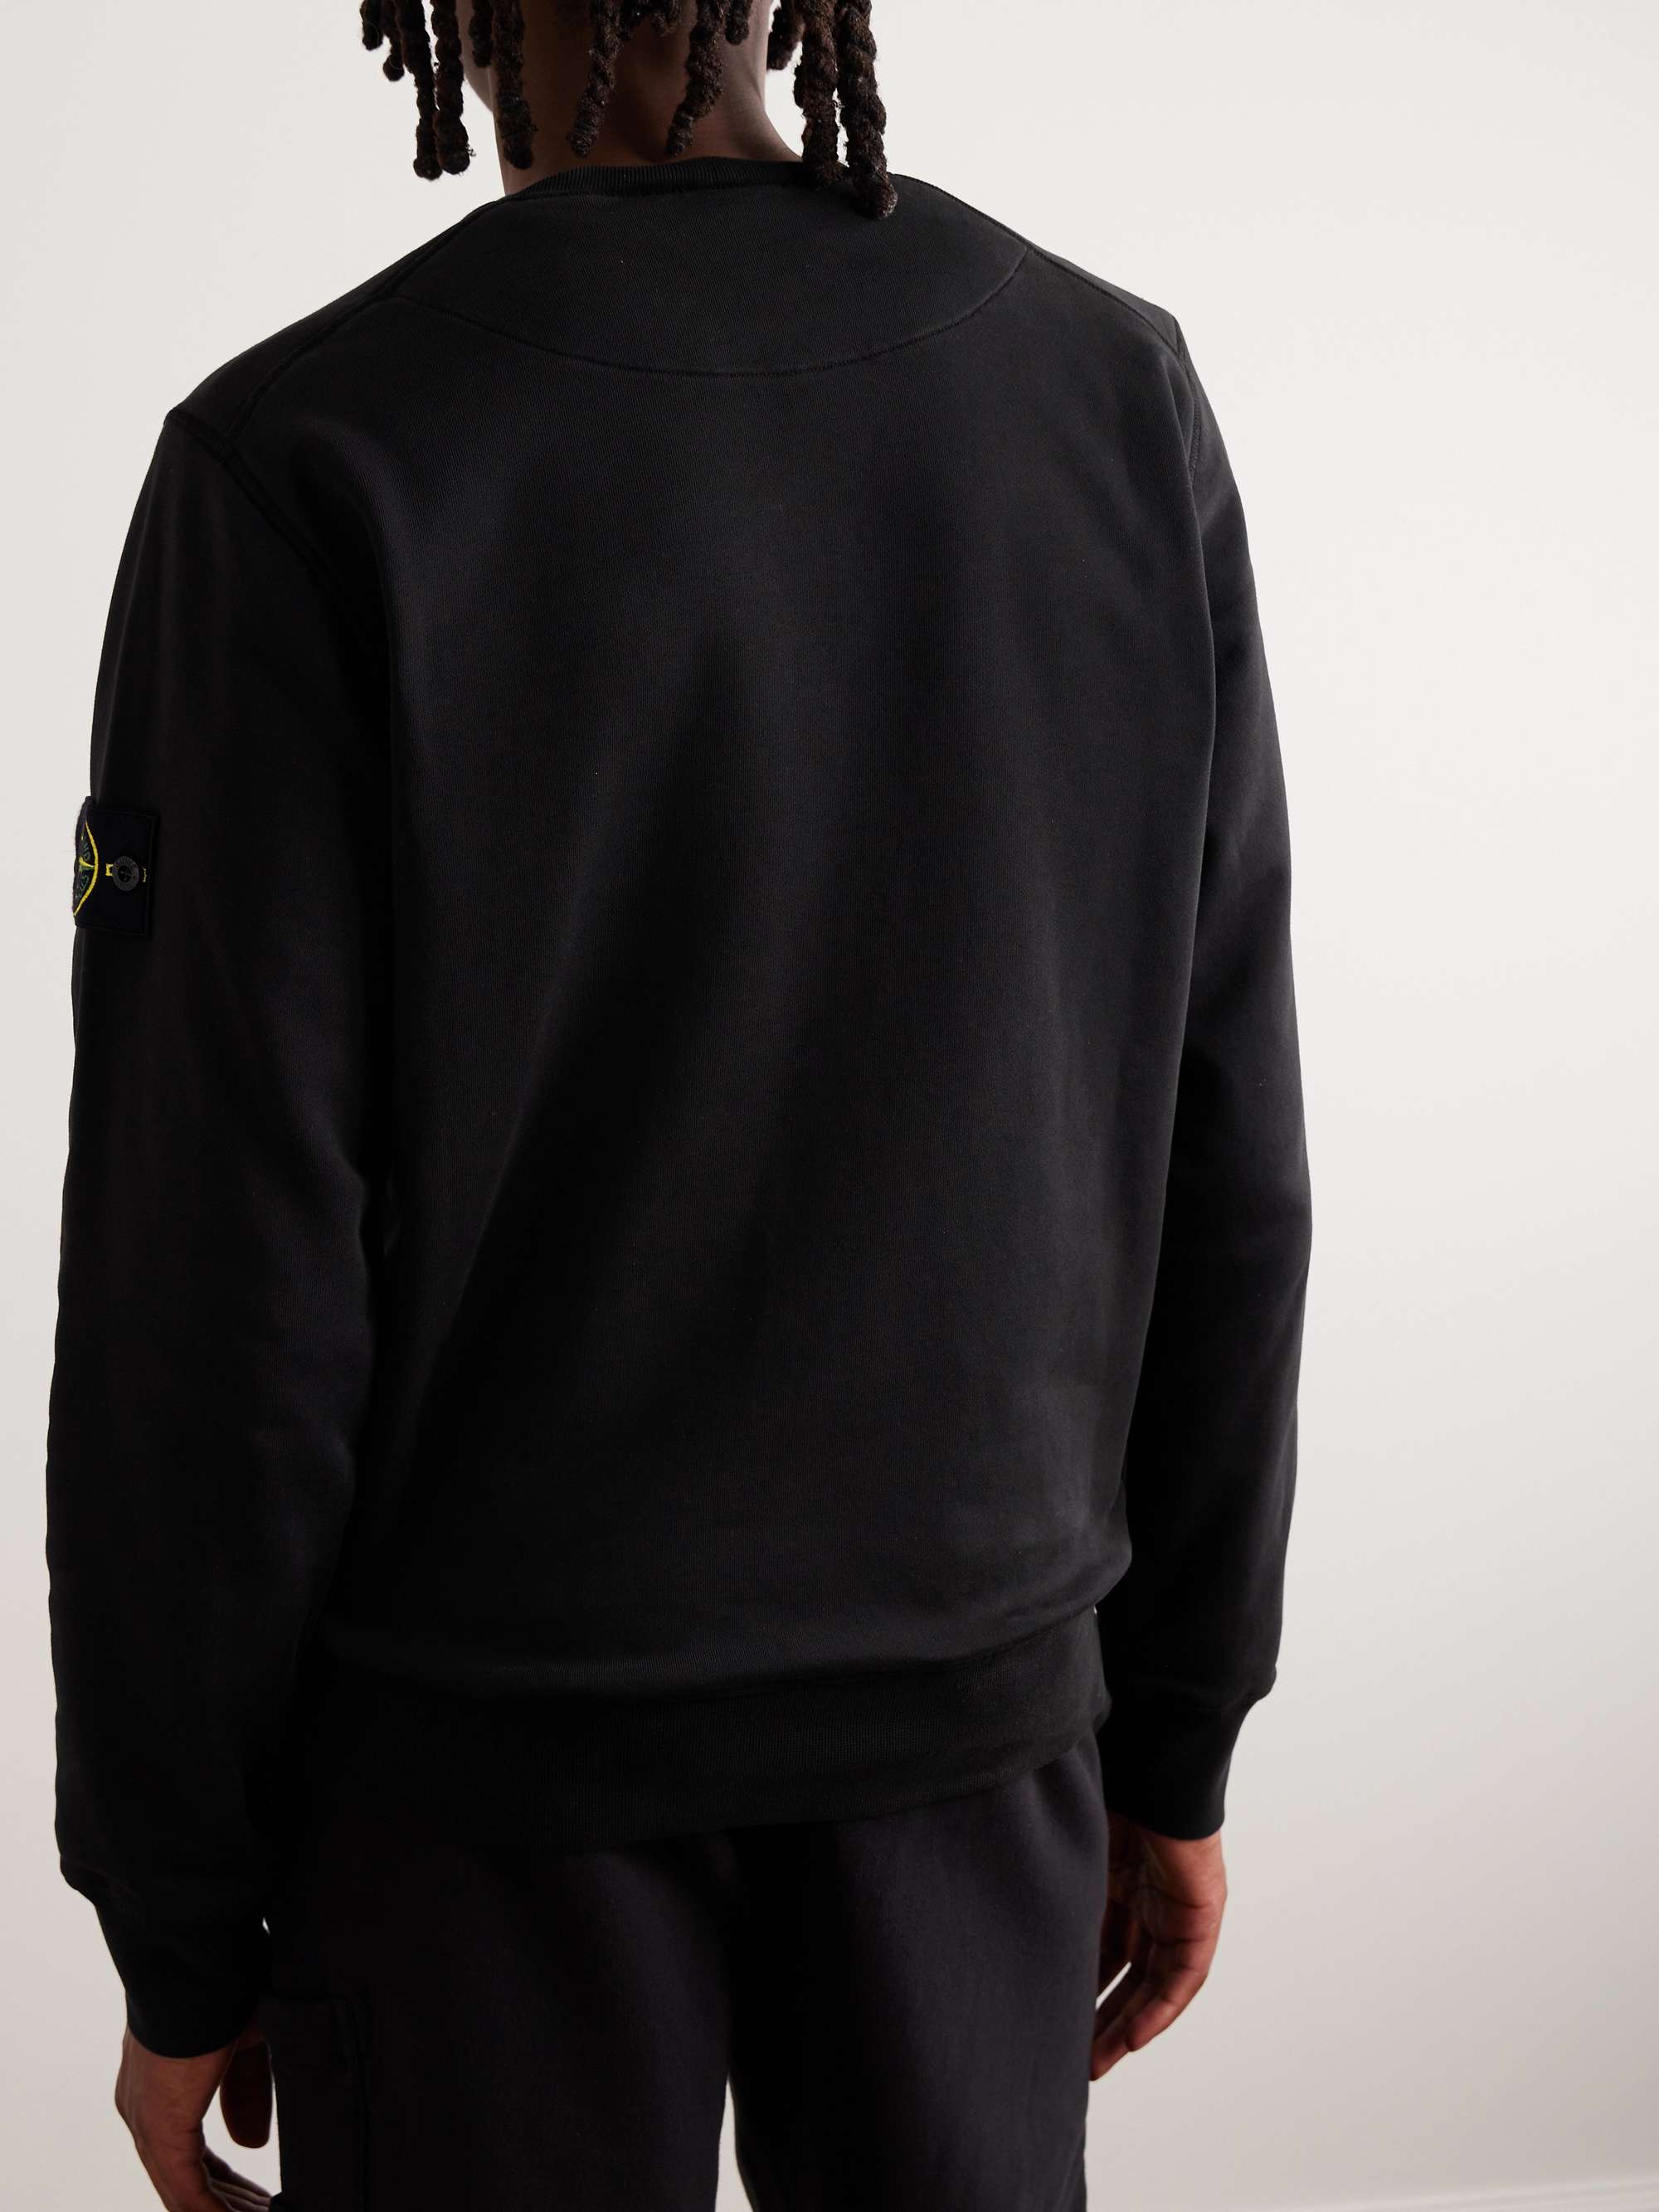 STONE ISLAND Logo-Appliquéd Cotton-Jersey Sweatshirt for Men | MR PORTER